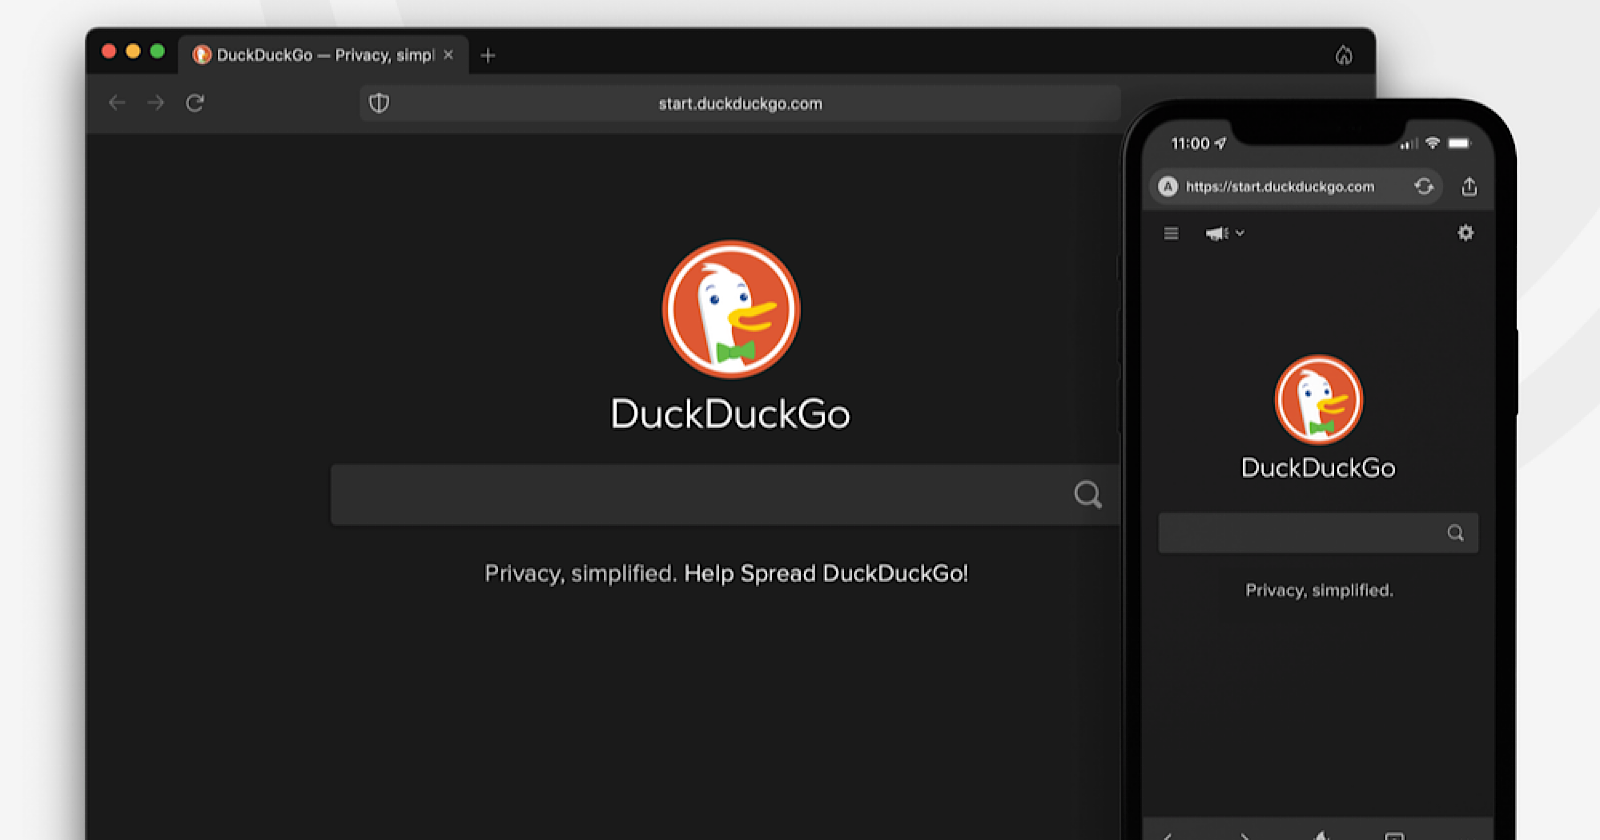 DuckDuckGo To Release Desktop Version Of Mobile App via @sejournal, @MattGSouthern